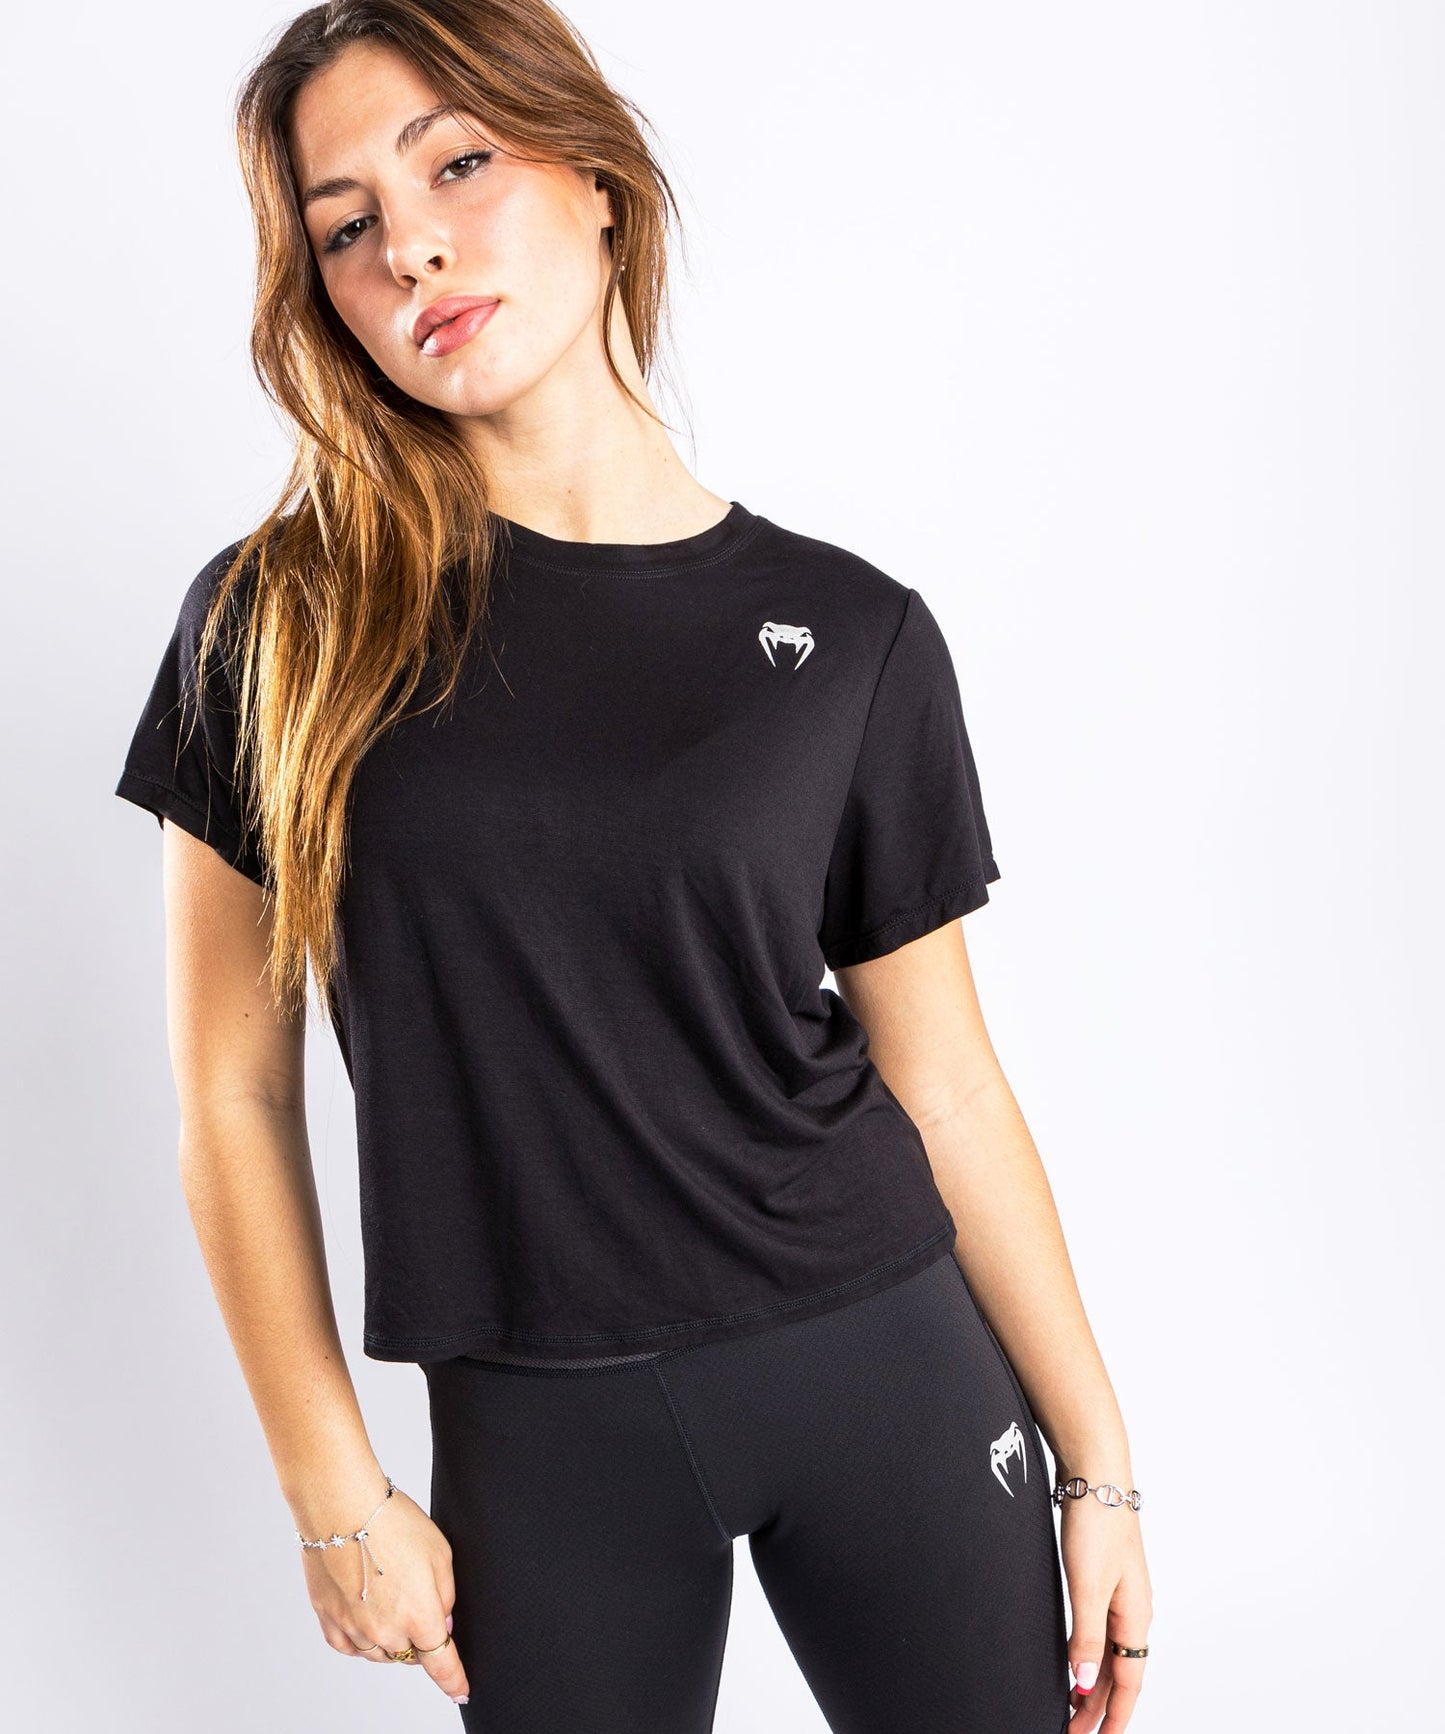 Venum Glow T-Shirt - For Women - Black